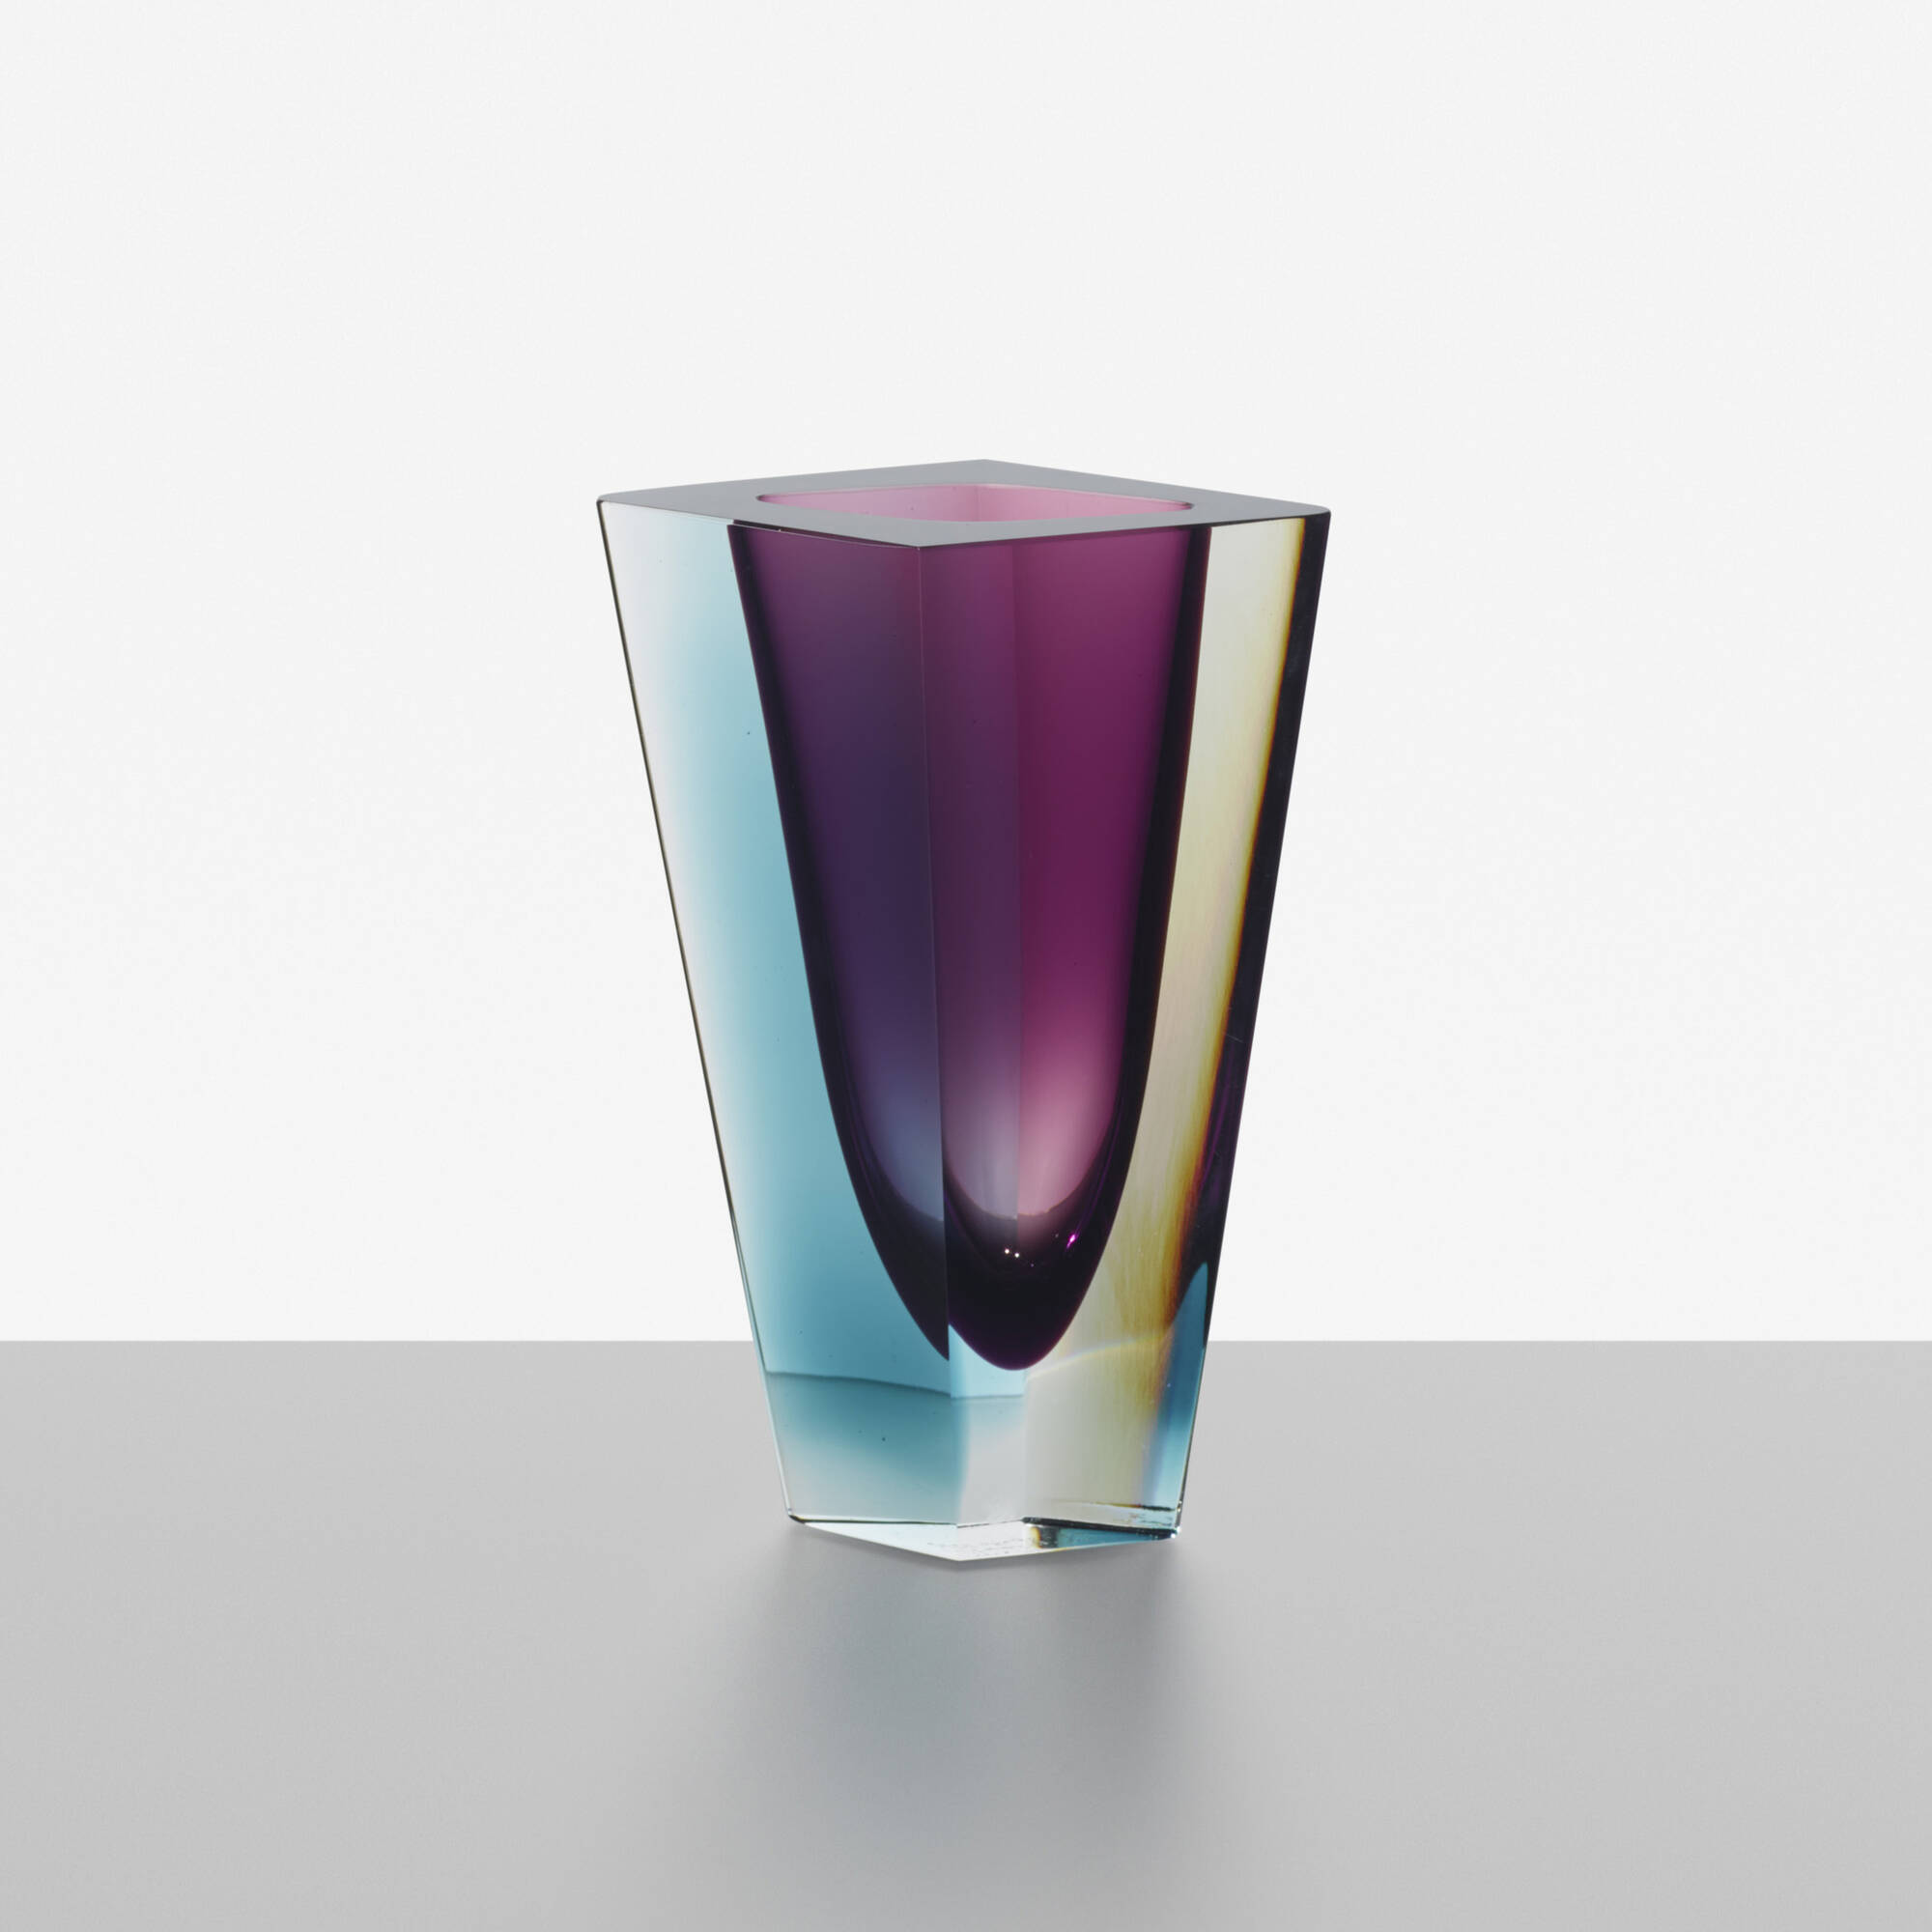 kaste støv i øjnene rør tabe 196: KAJ FRANCK, Prisma vase < Scandinavian Design, 18 May 2017 < Auctions  | Wright: Auctions of Art and Design